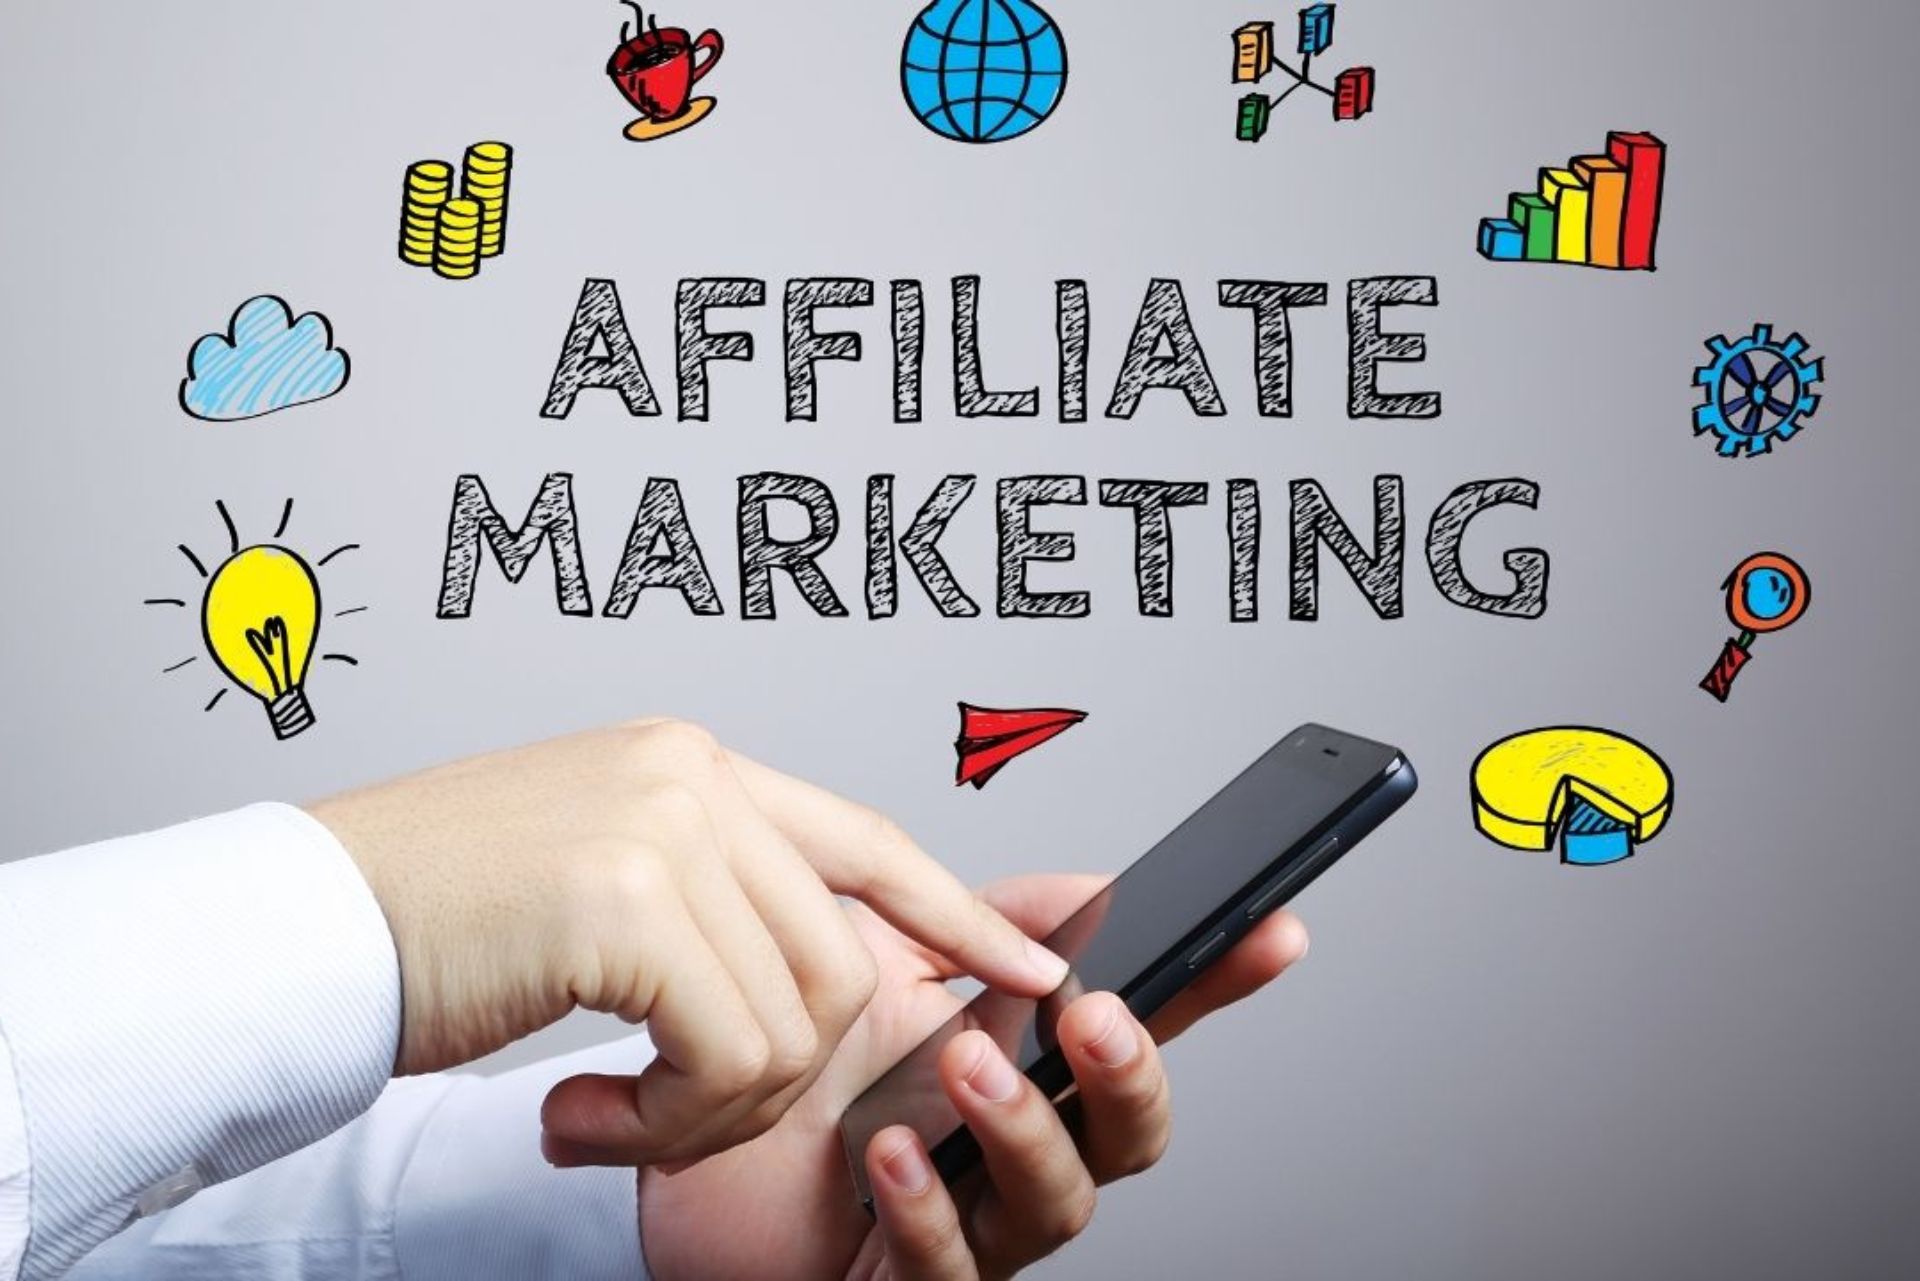 affiliate marketing blog